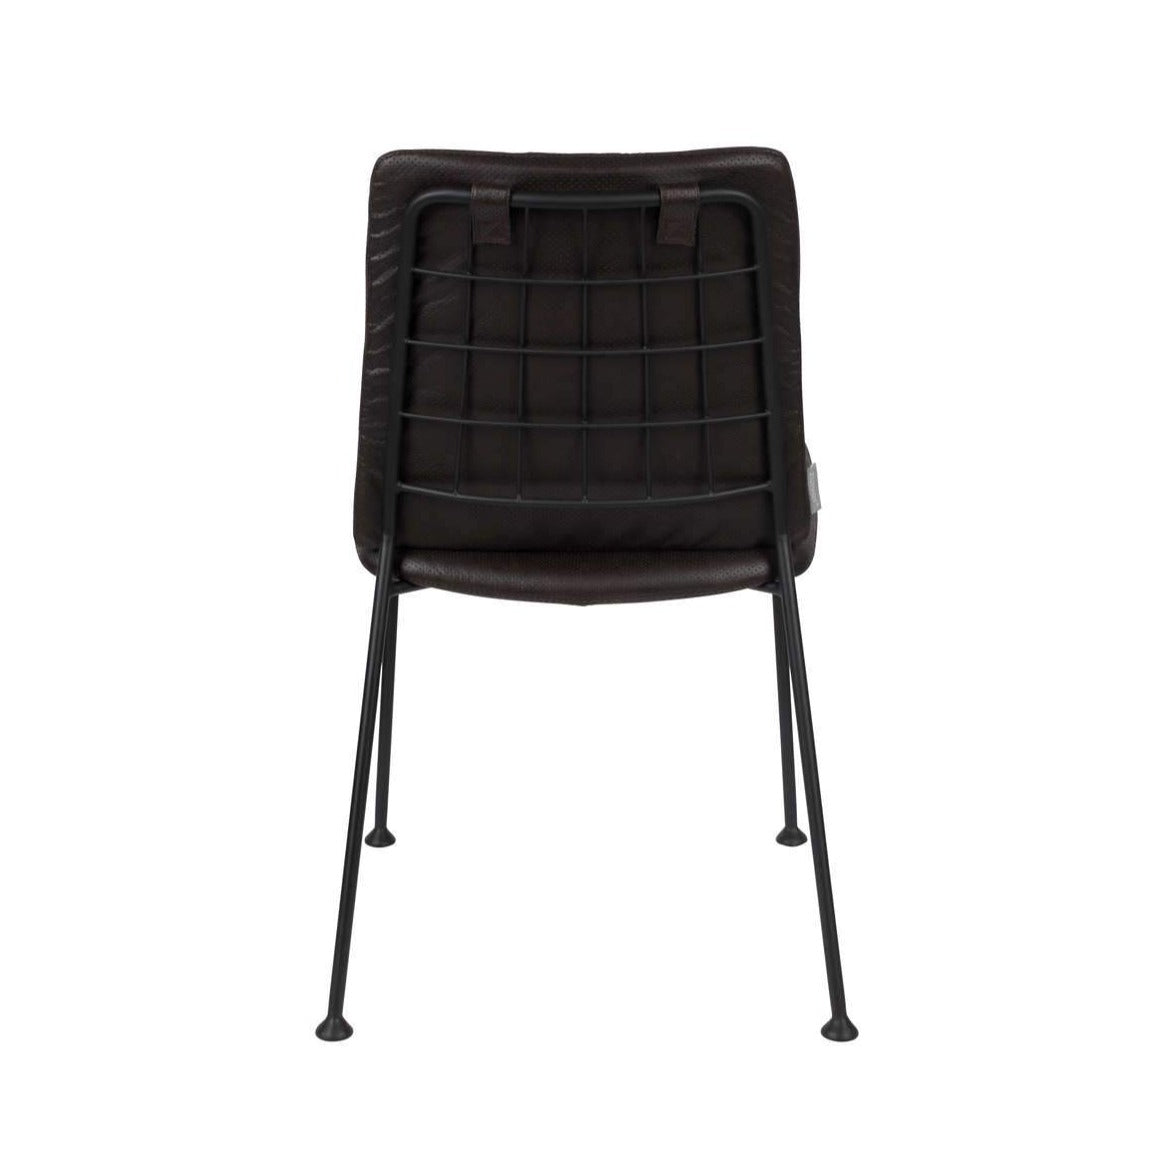 FAB chair black, Zuiver, Eye on Design